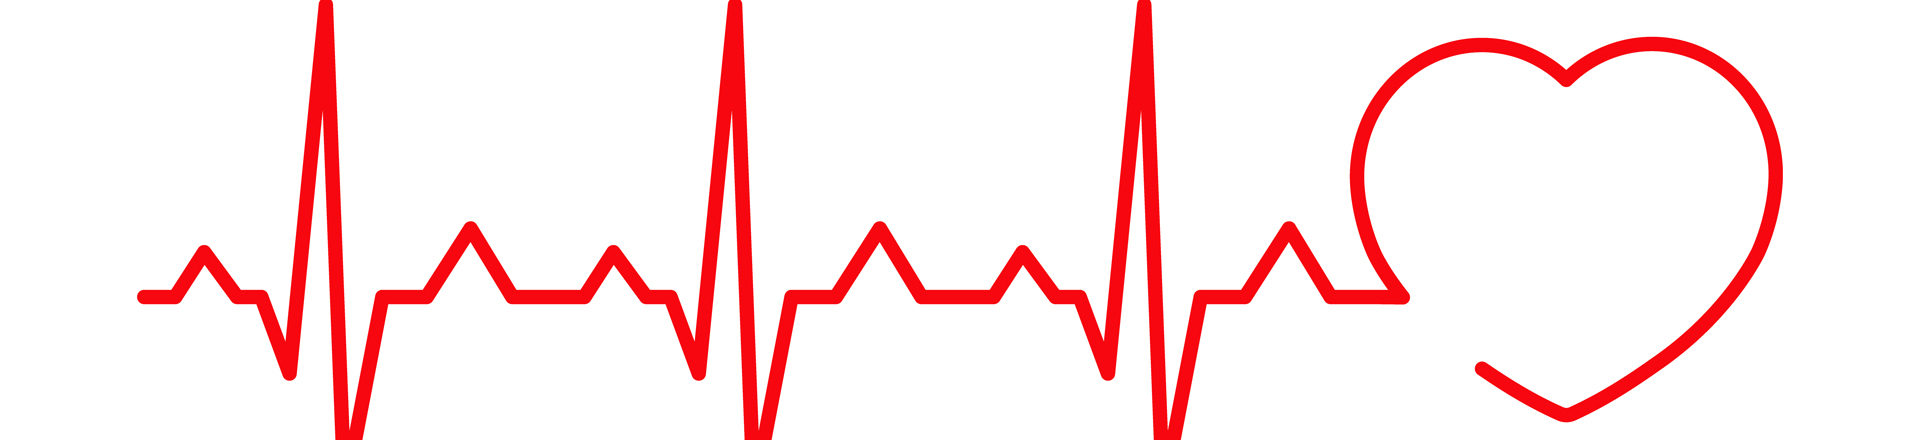 irregular heartbeat ekg - when to worry about heart palpitations